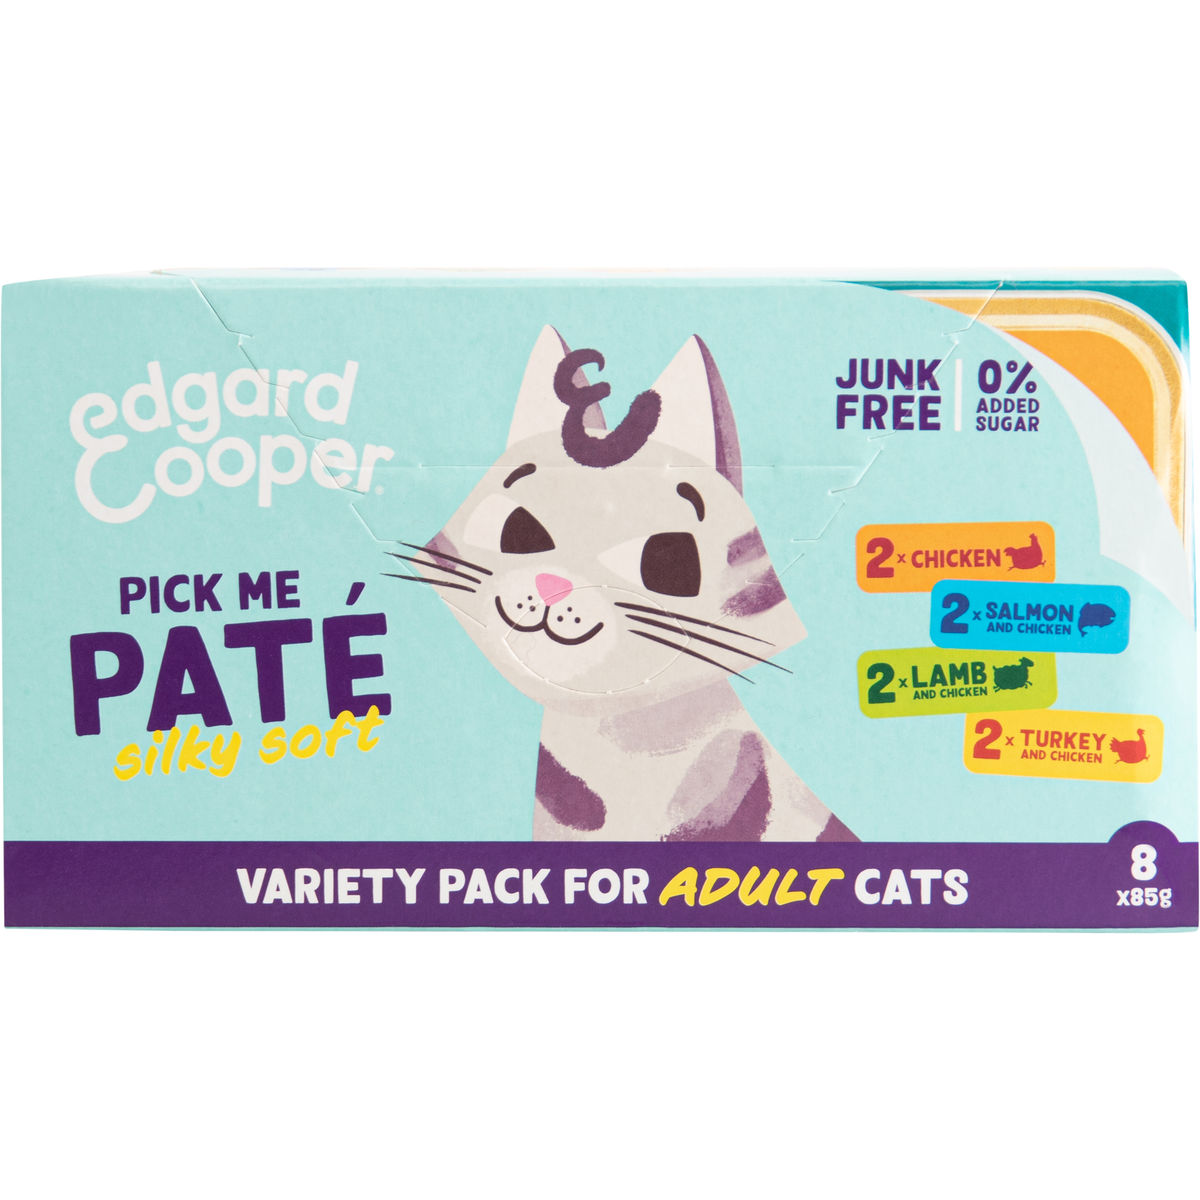 Edgard & Cooper Paté Variety Pack Adult 8 x 85 g